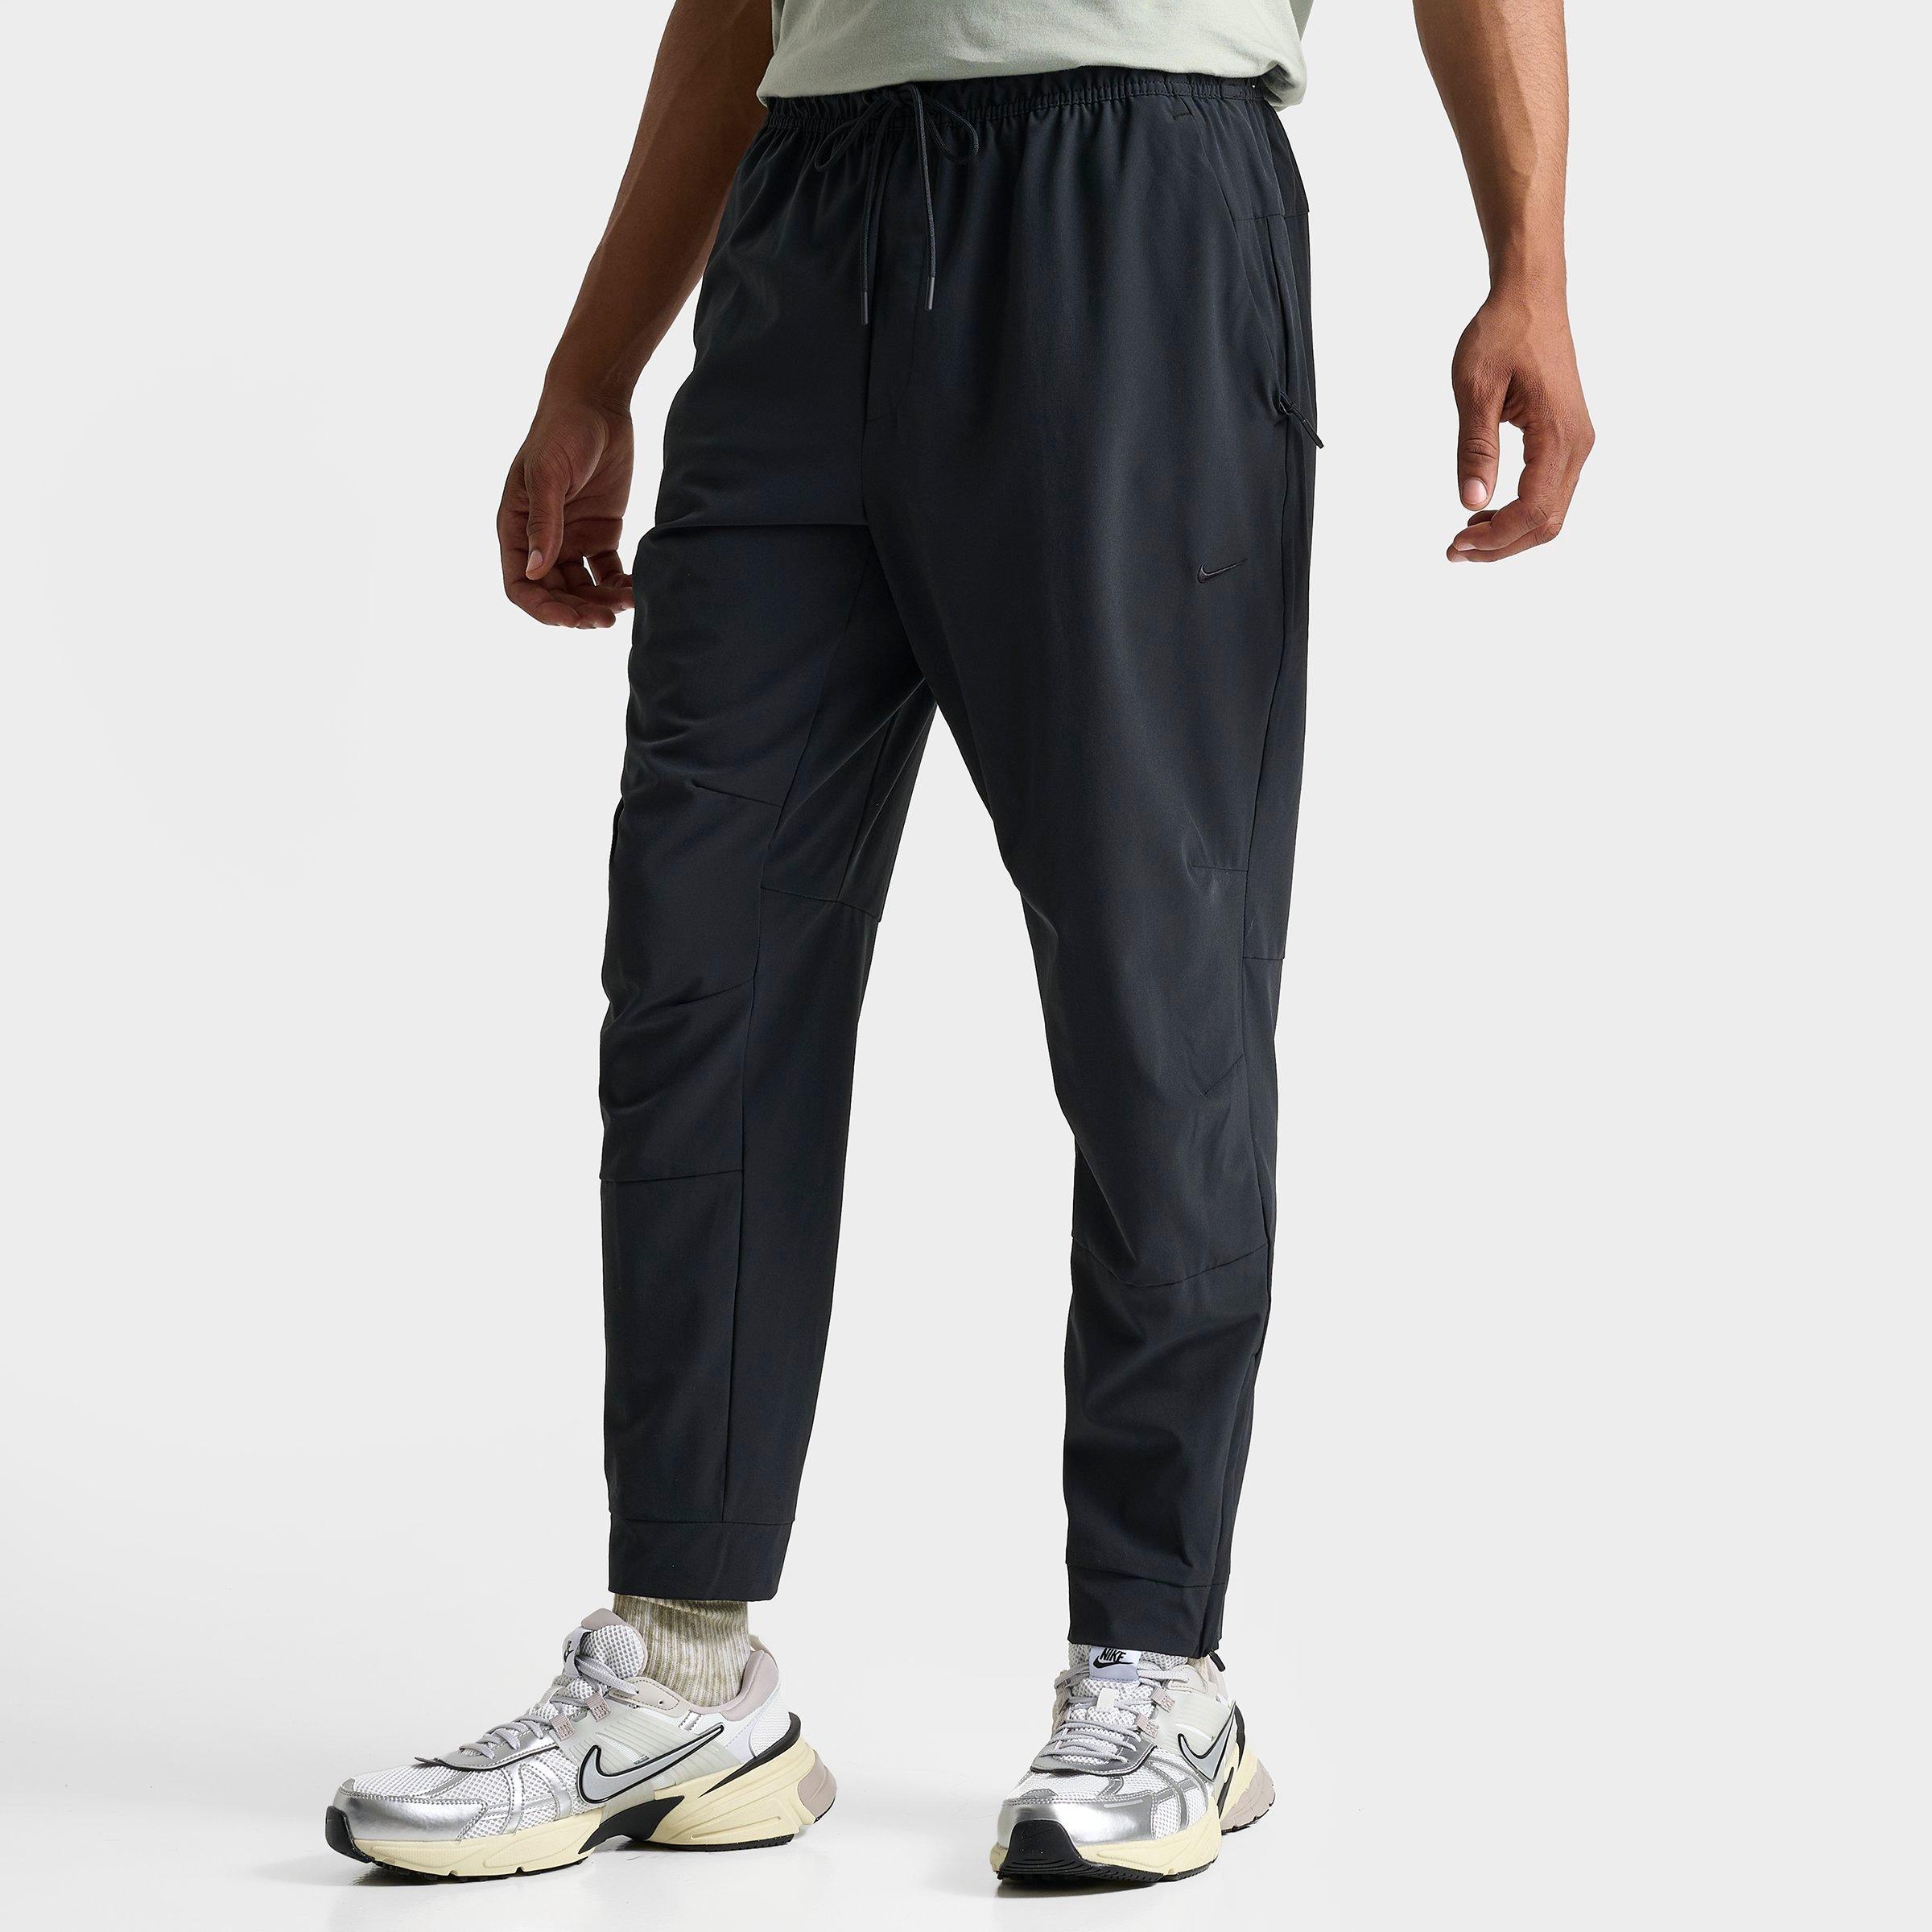 Nike Men's Dri-fit Unlimited Tapered Leg Versatile Training Pants In Black/black/black